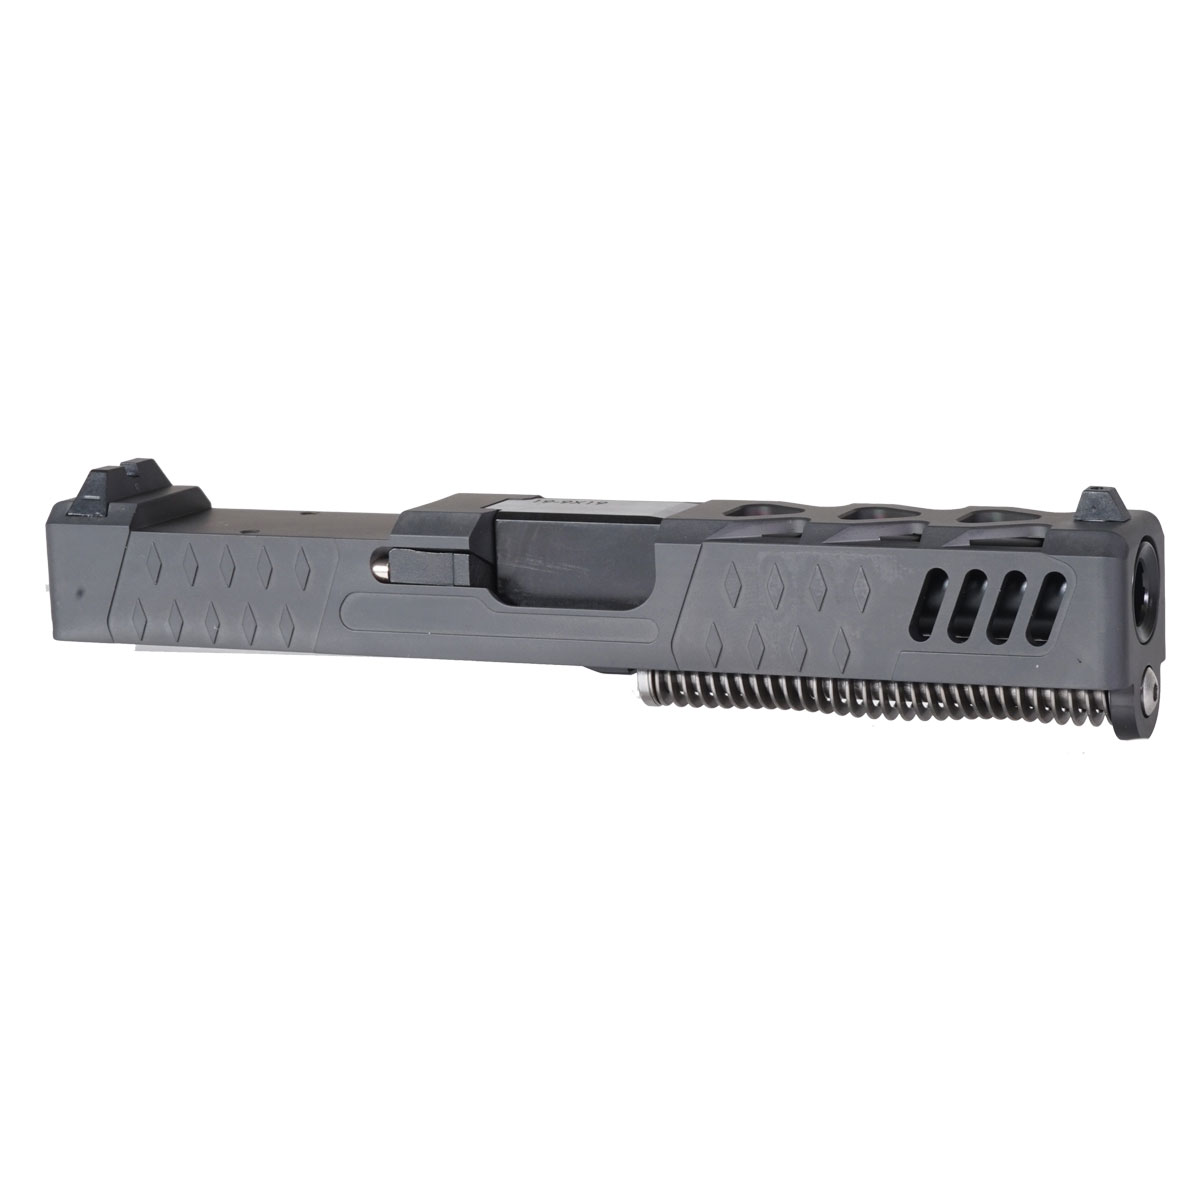 MMC 'The Sarah' 9mm Complete Slide Kit - Glock 19 Gen 1-3 Compatible